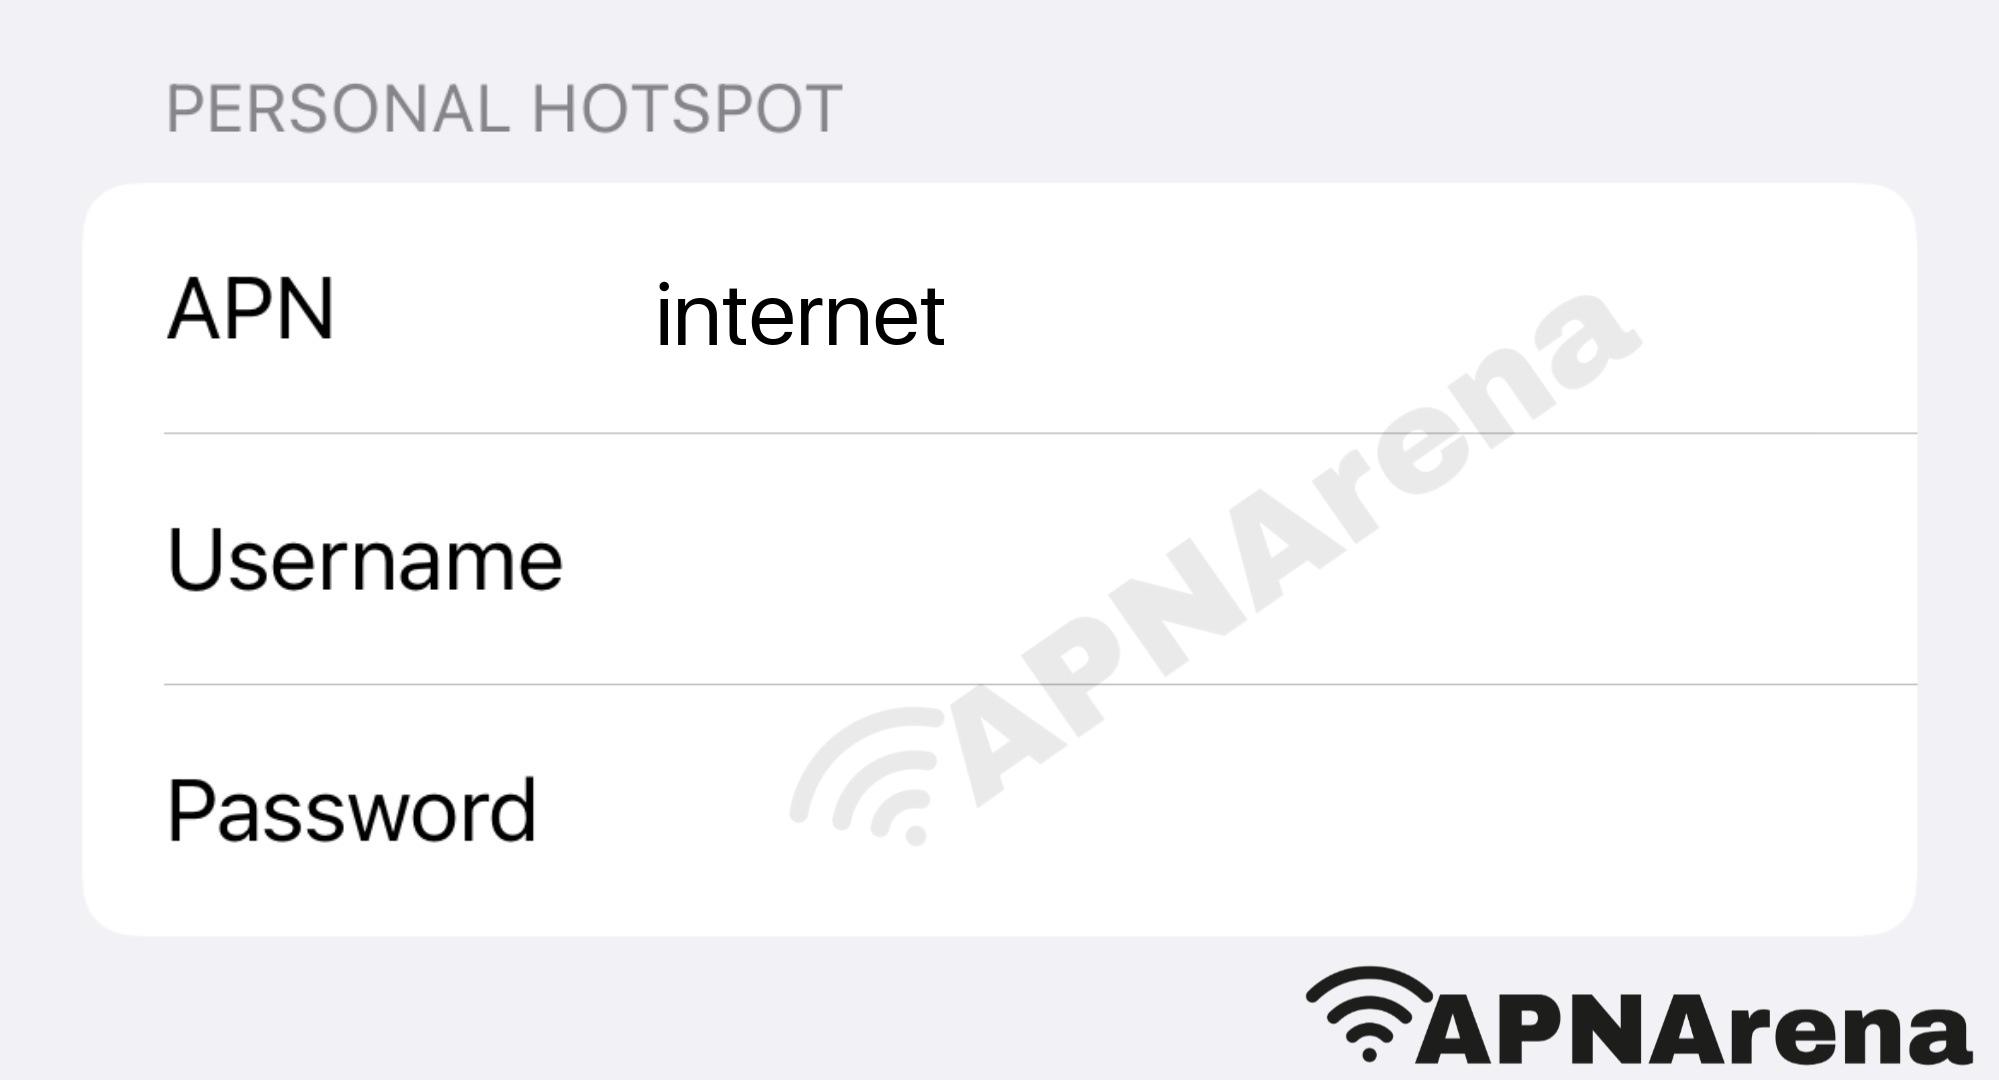 Safaricom Personal Hotspot Settings for iPhone